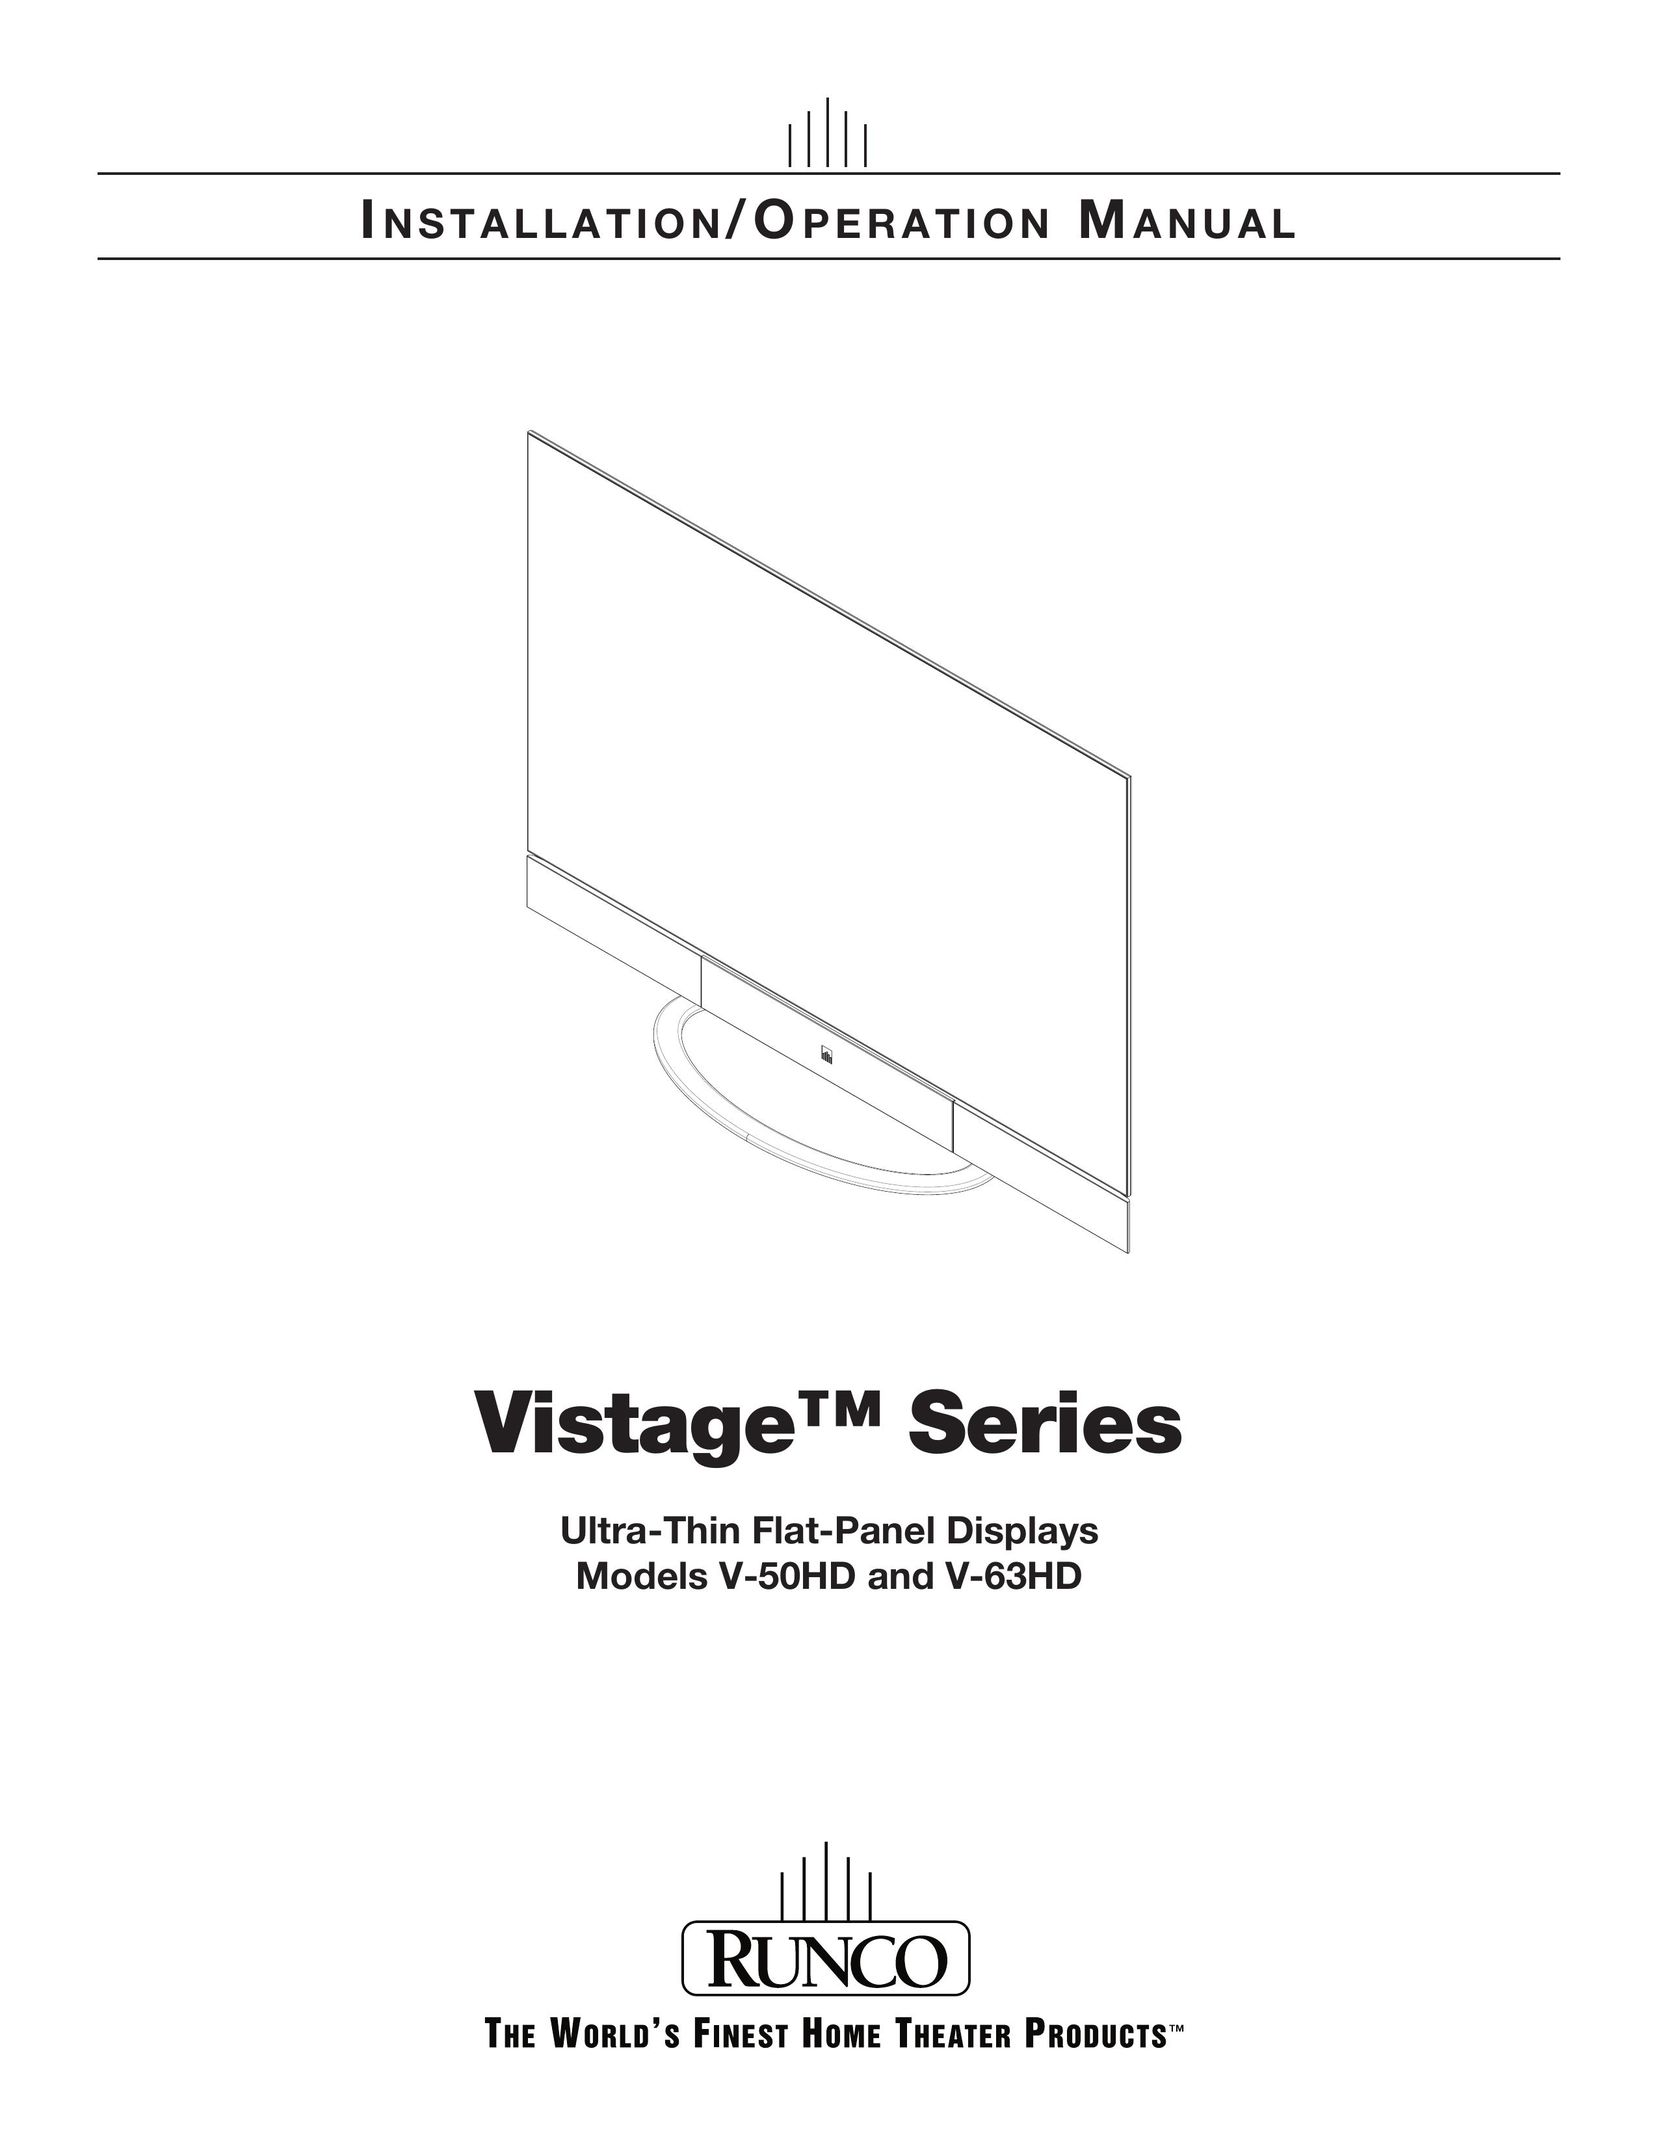 Runco V-63HD Home Theater Screen User Manual